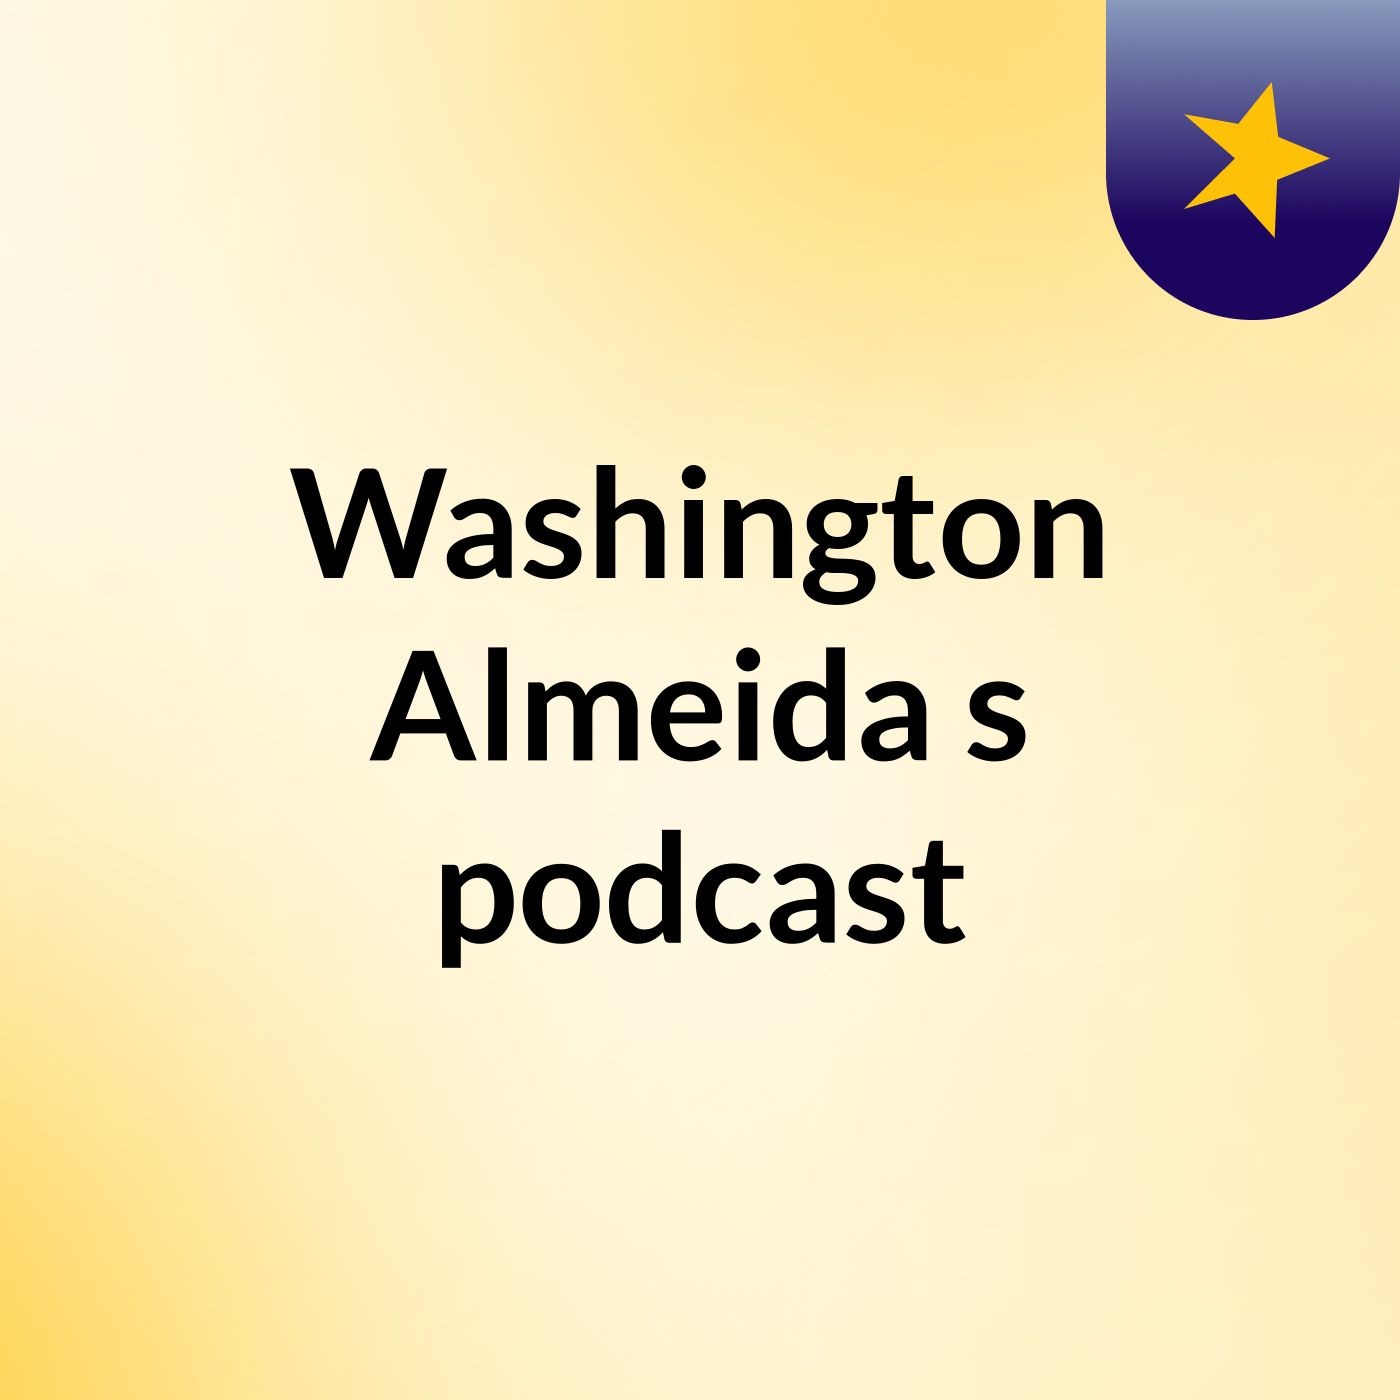 Washington Almeida's podcast